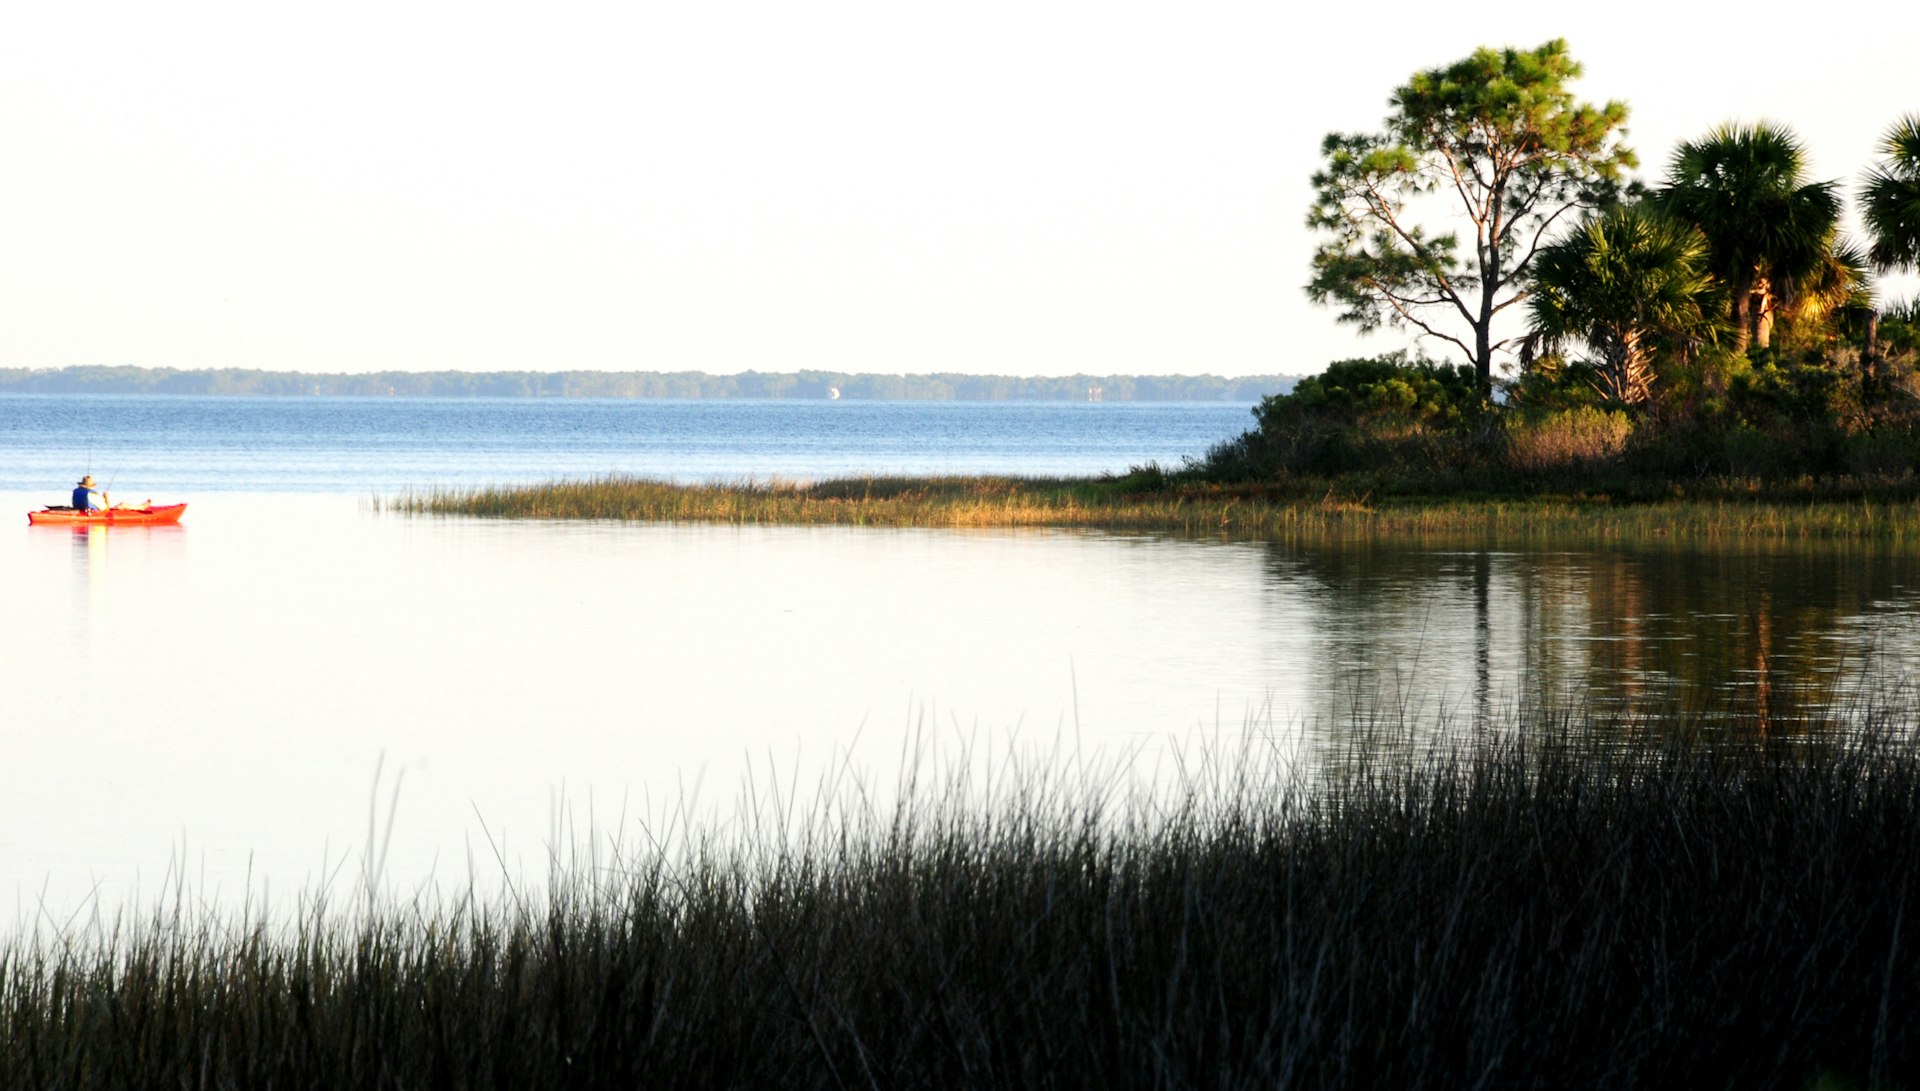 Reeds on lake edge and kayaker in Florida